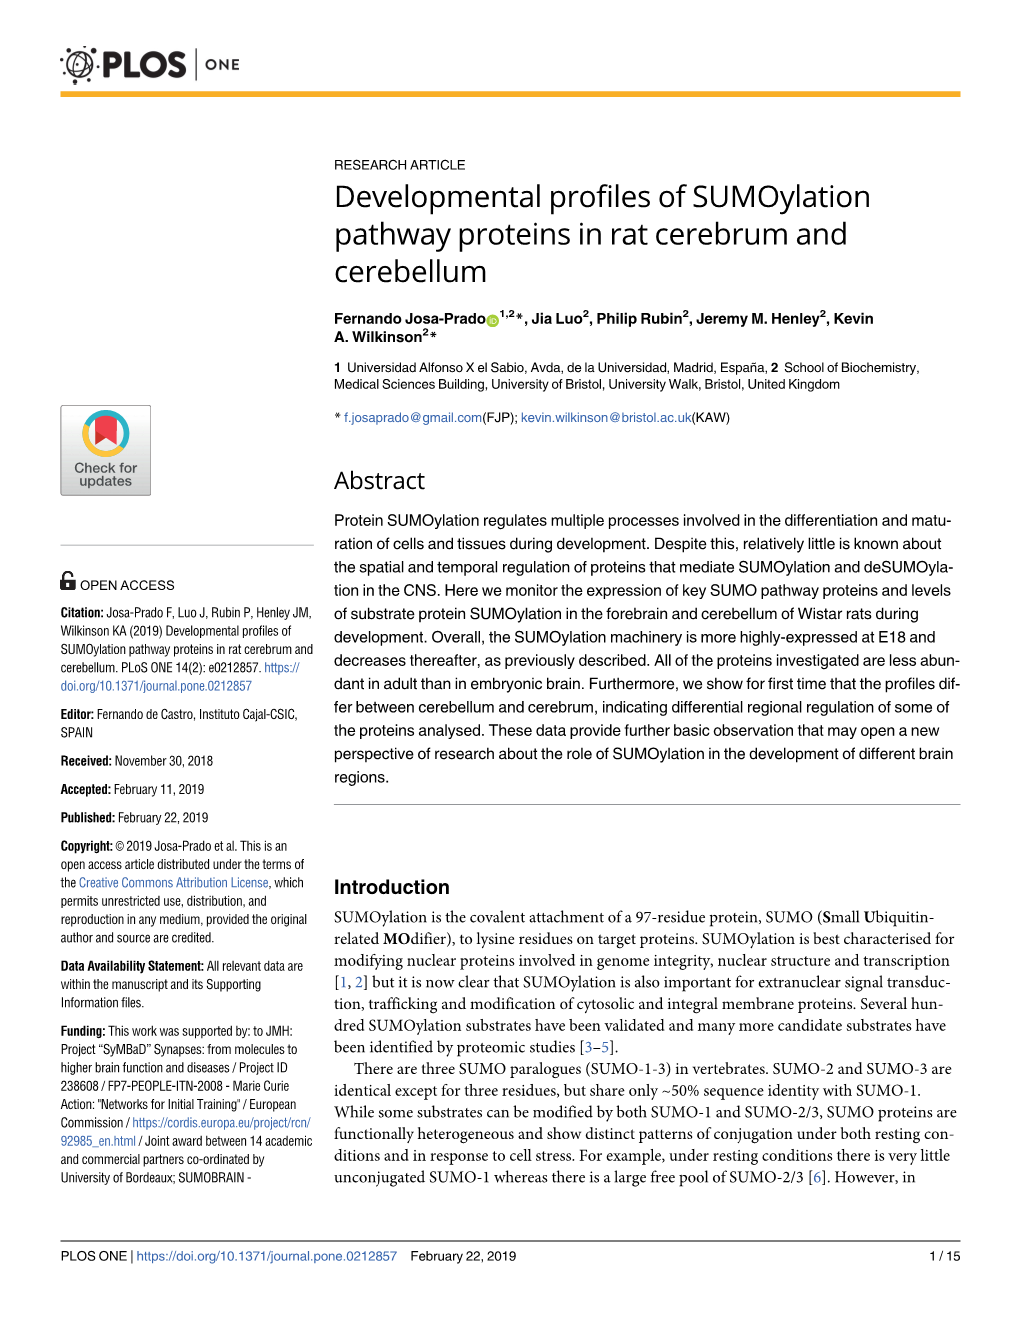 Developmental Profiles of Sumoylation Pathway Proteins in Rat Cerebrum and Cerebellum